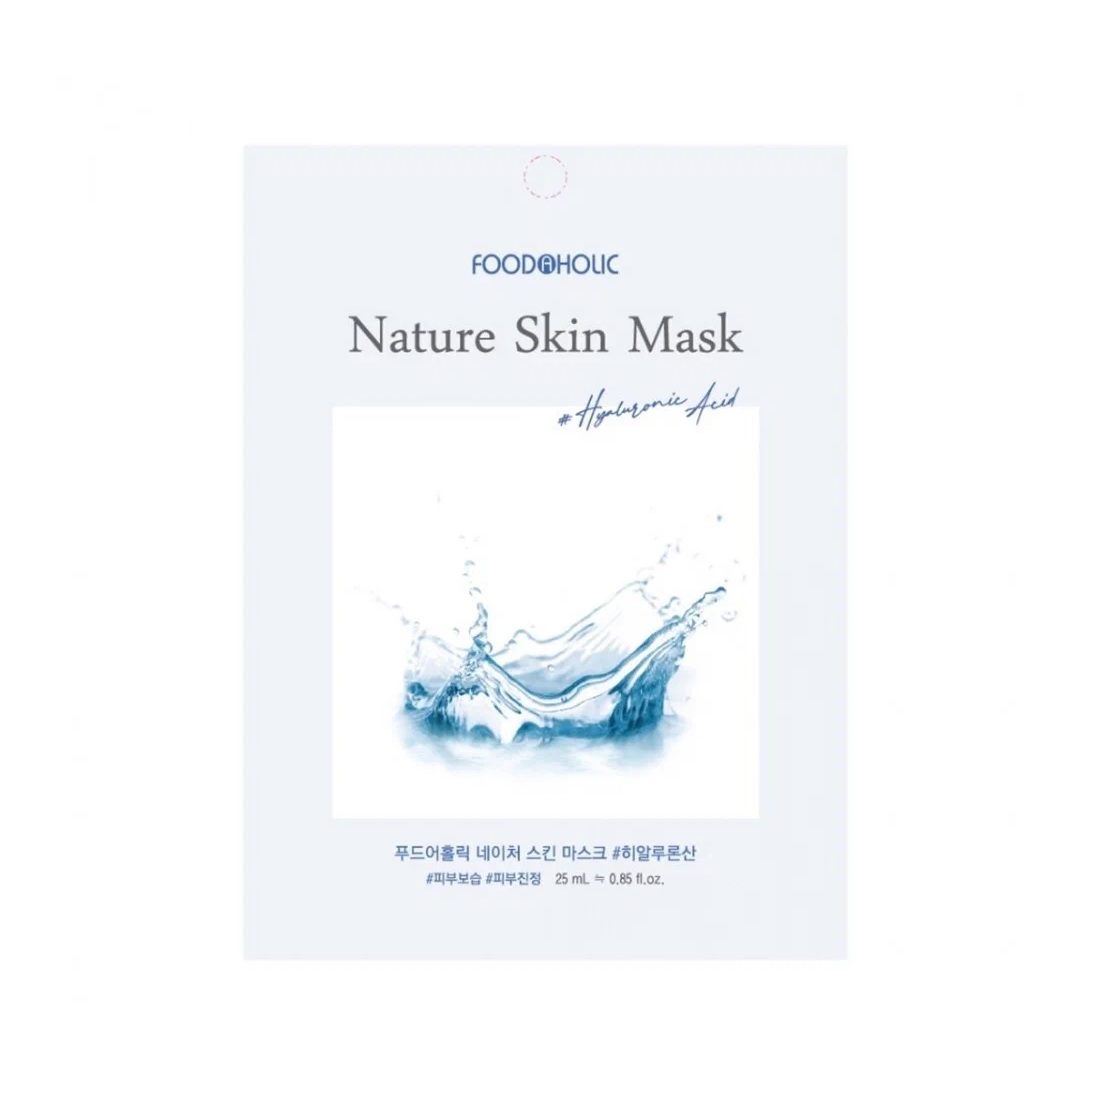 FOODAHOLIC, Тканевая маска для лица с гиалуроновой кислотой Nature Skin Mask, 25 гр.